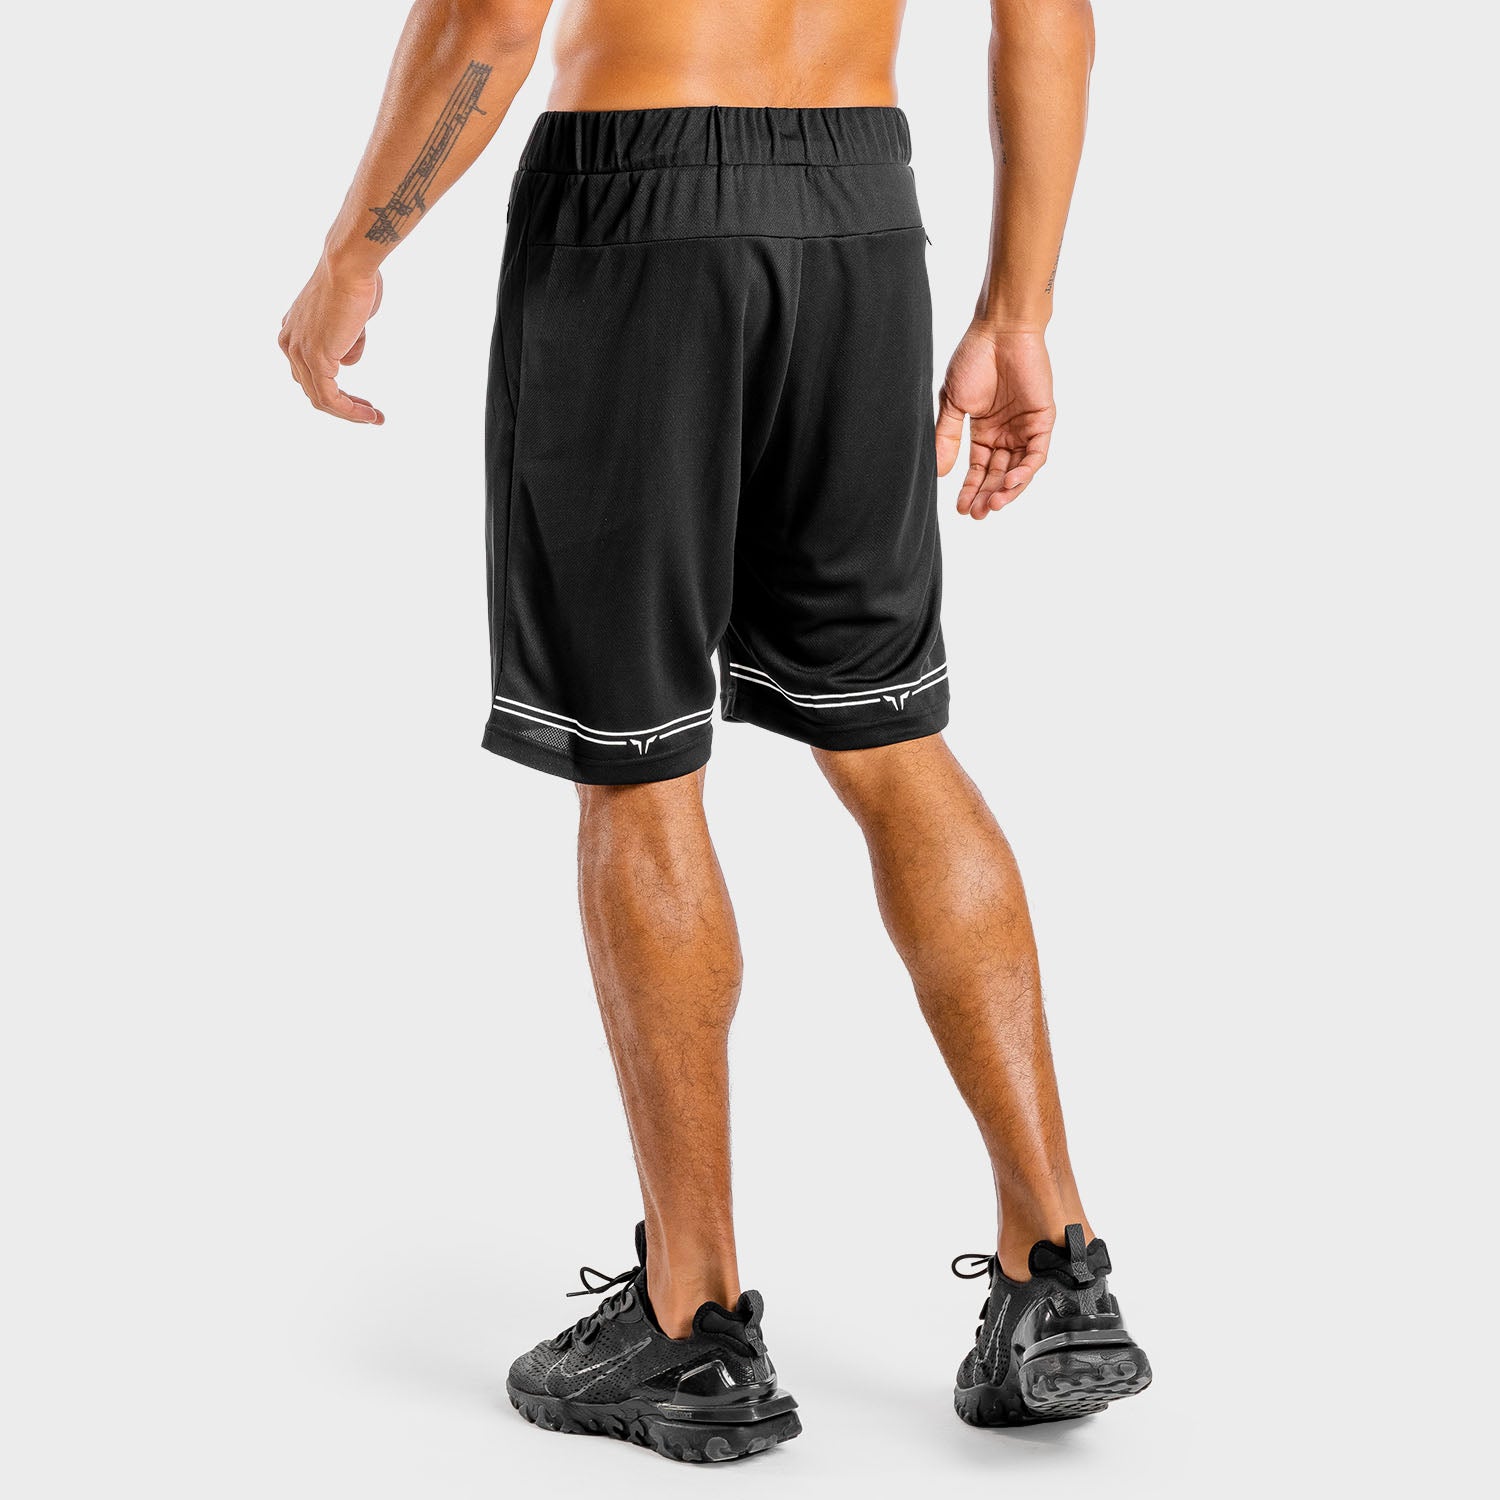 squatwolf-workout-short-for-men-flux-basketball-shorts-black-gym-wear